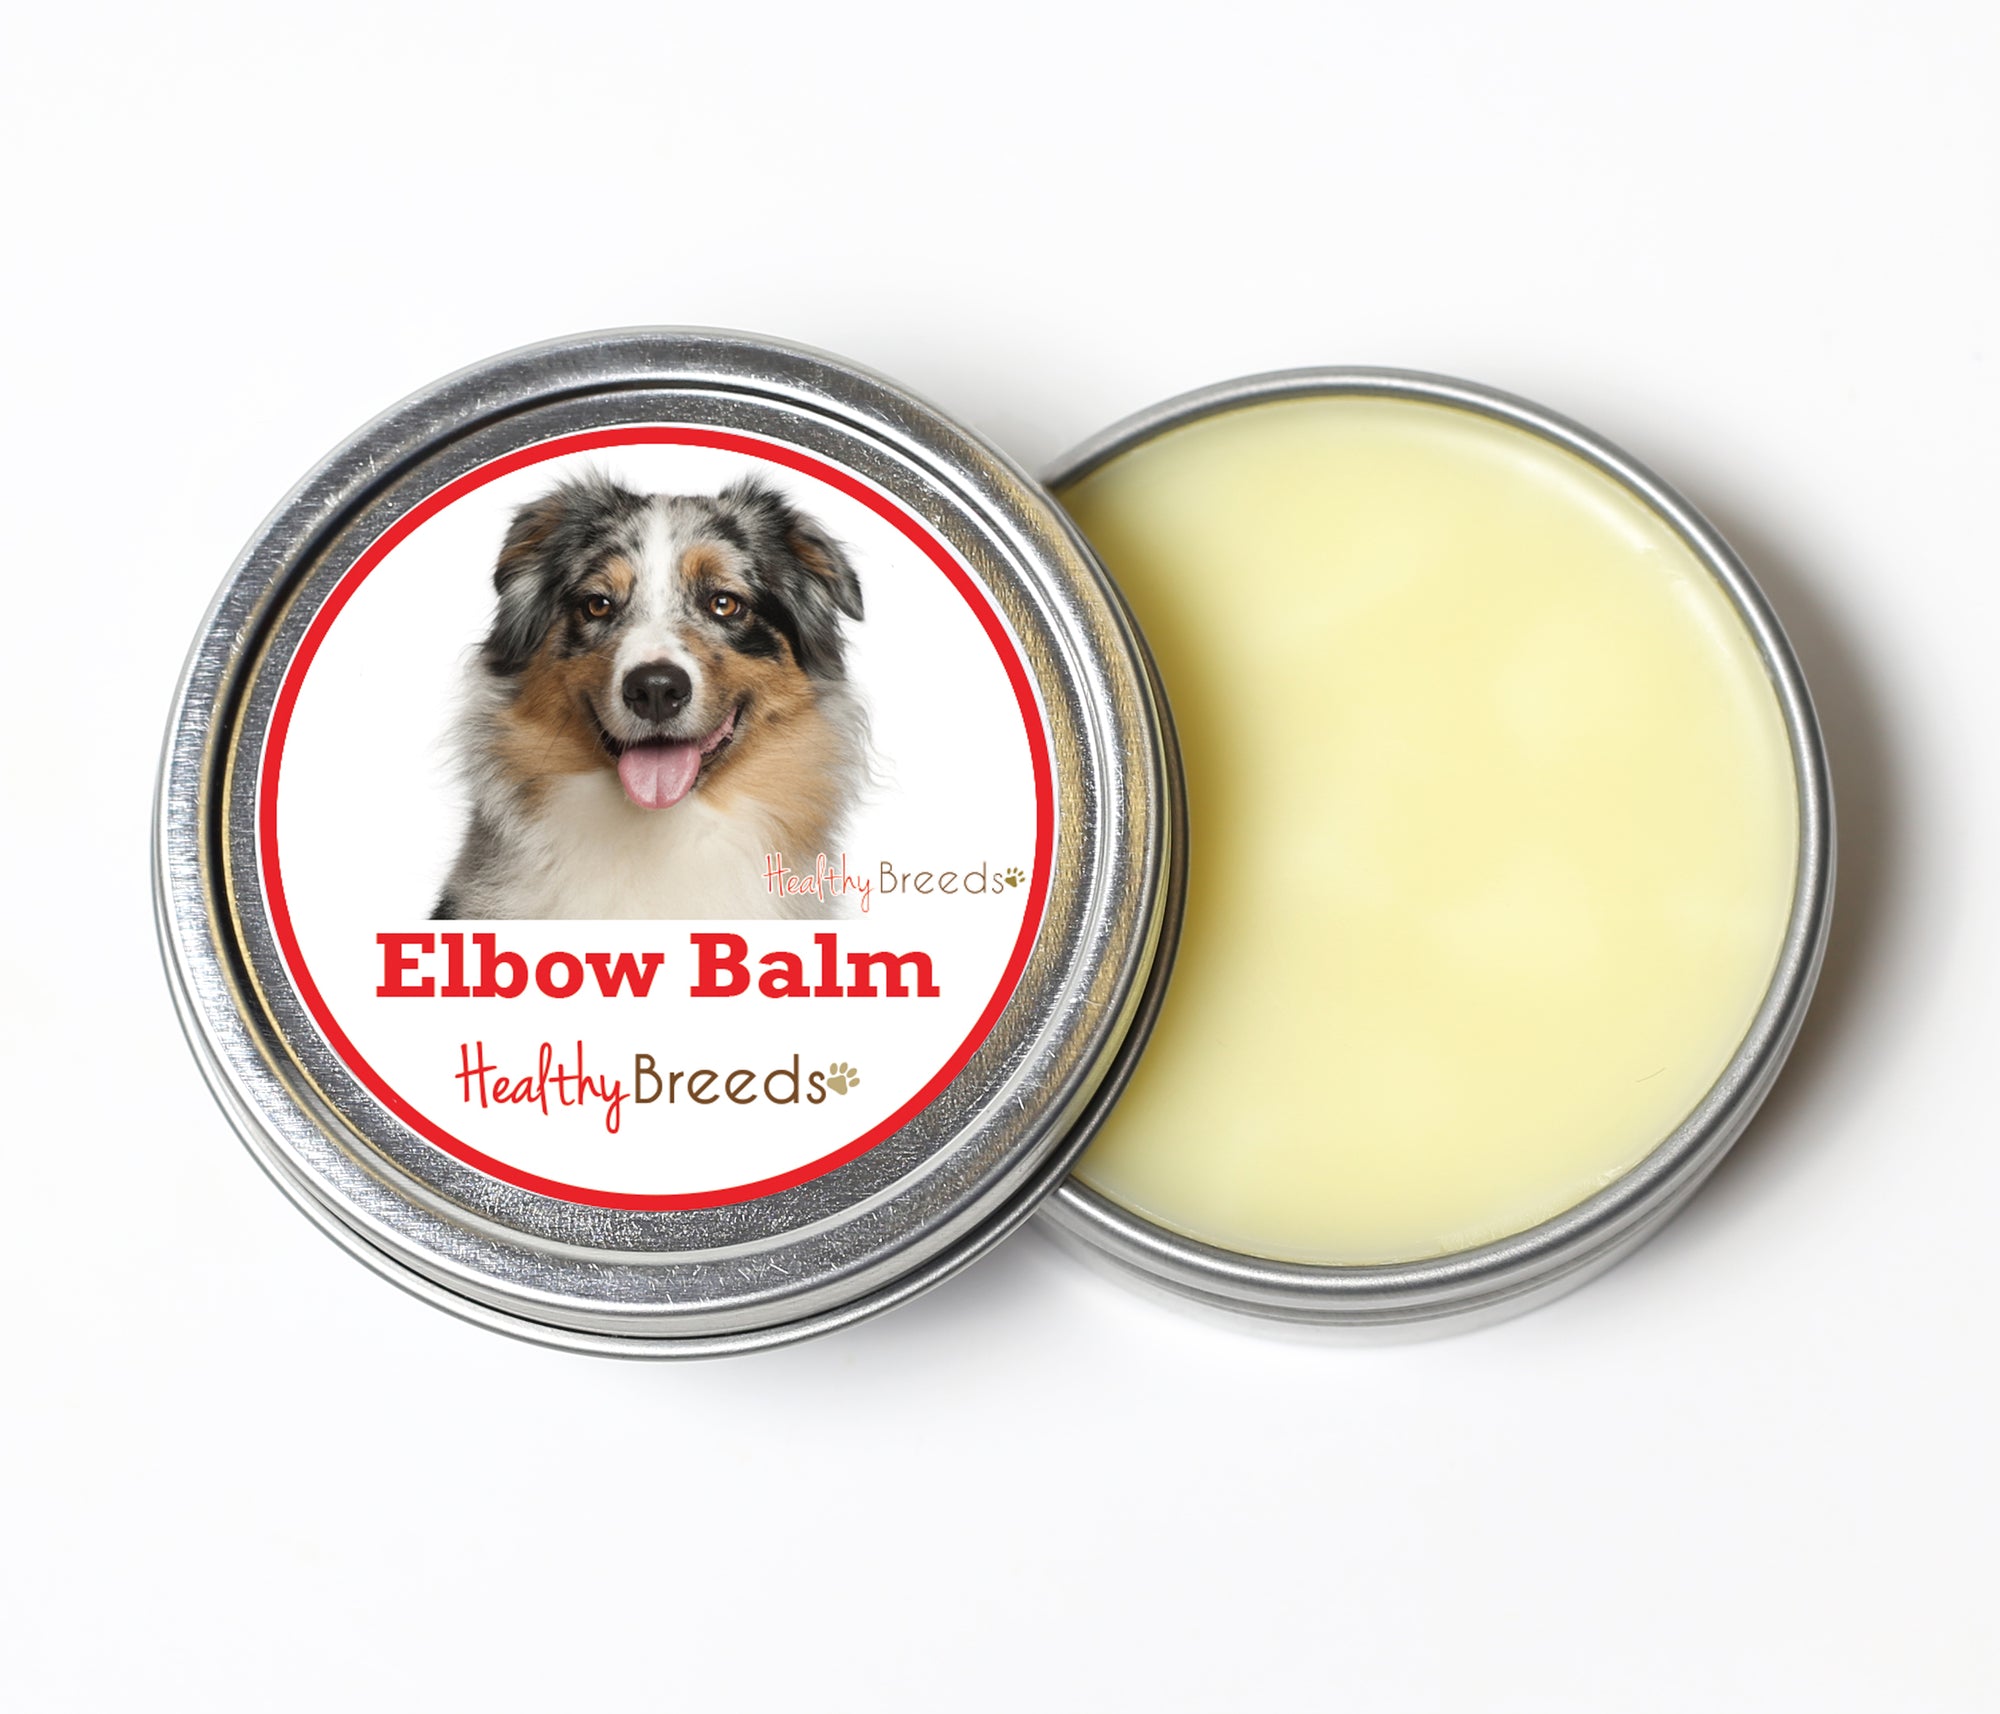 Healthy Breeds Australian Shepherd Dog Elbow Balm 2 oz